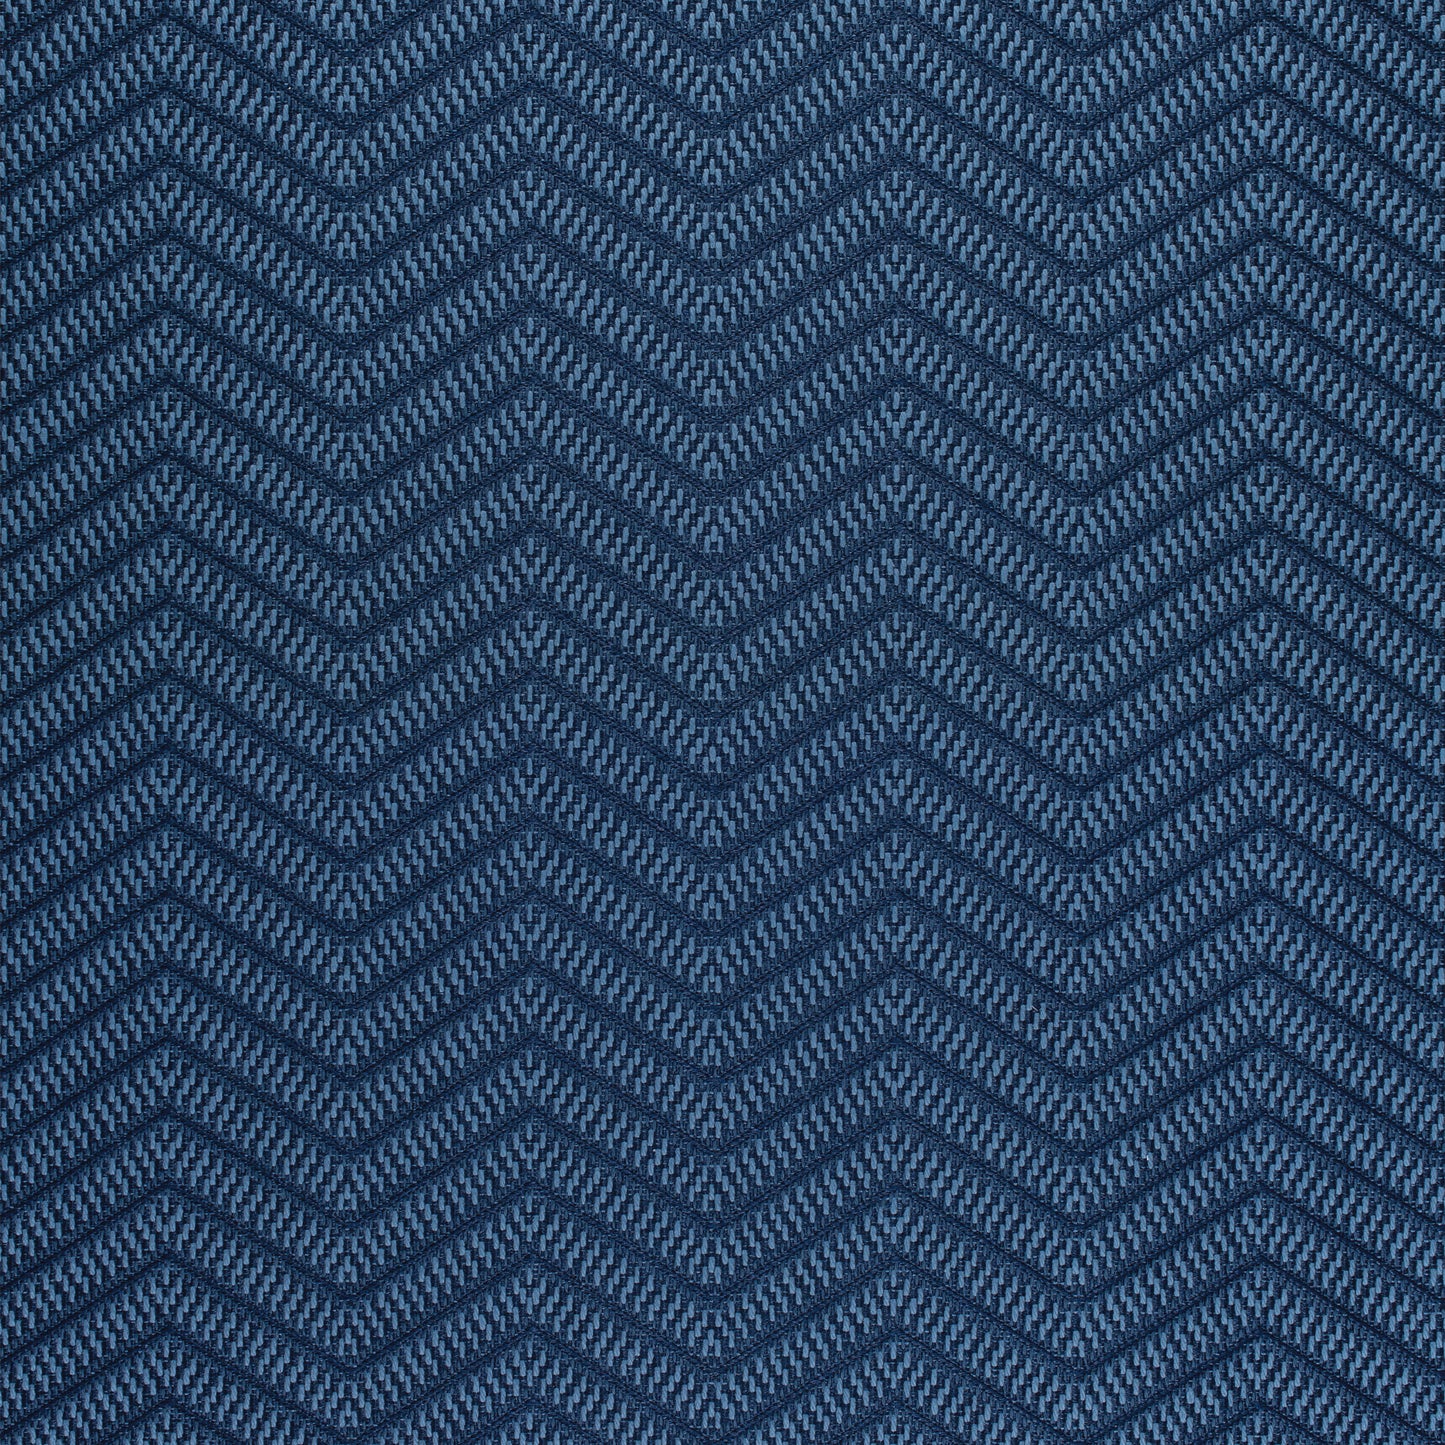 Purchase Thibaut Fabric Product# W80634 pattern name Matari Chevron color Blue